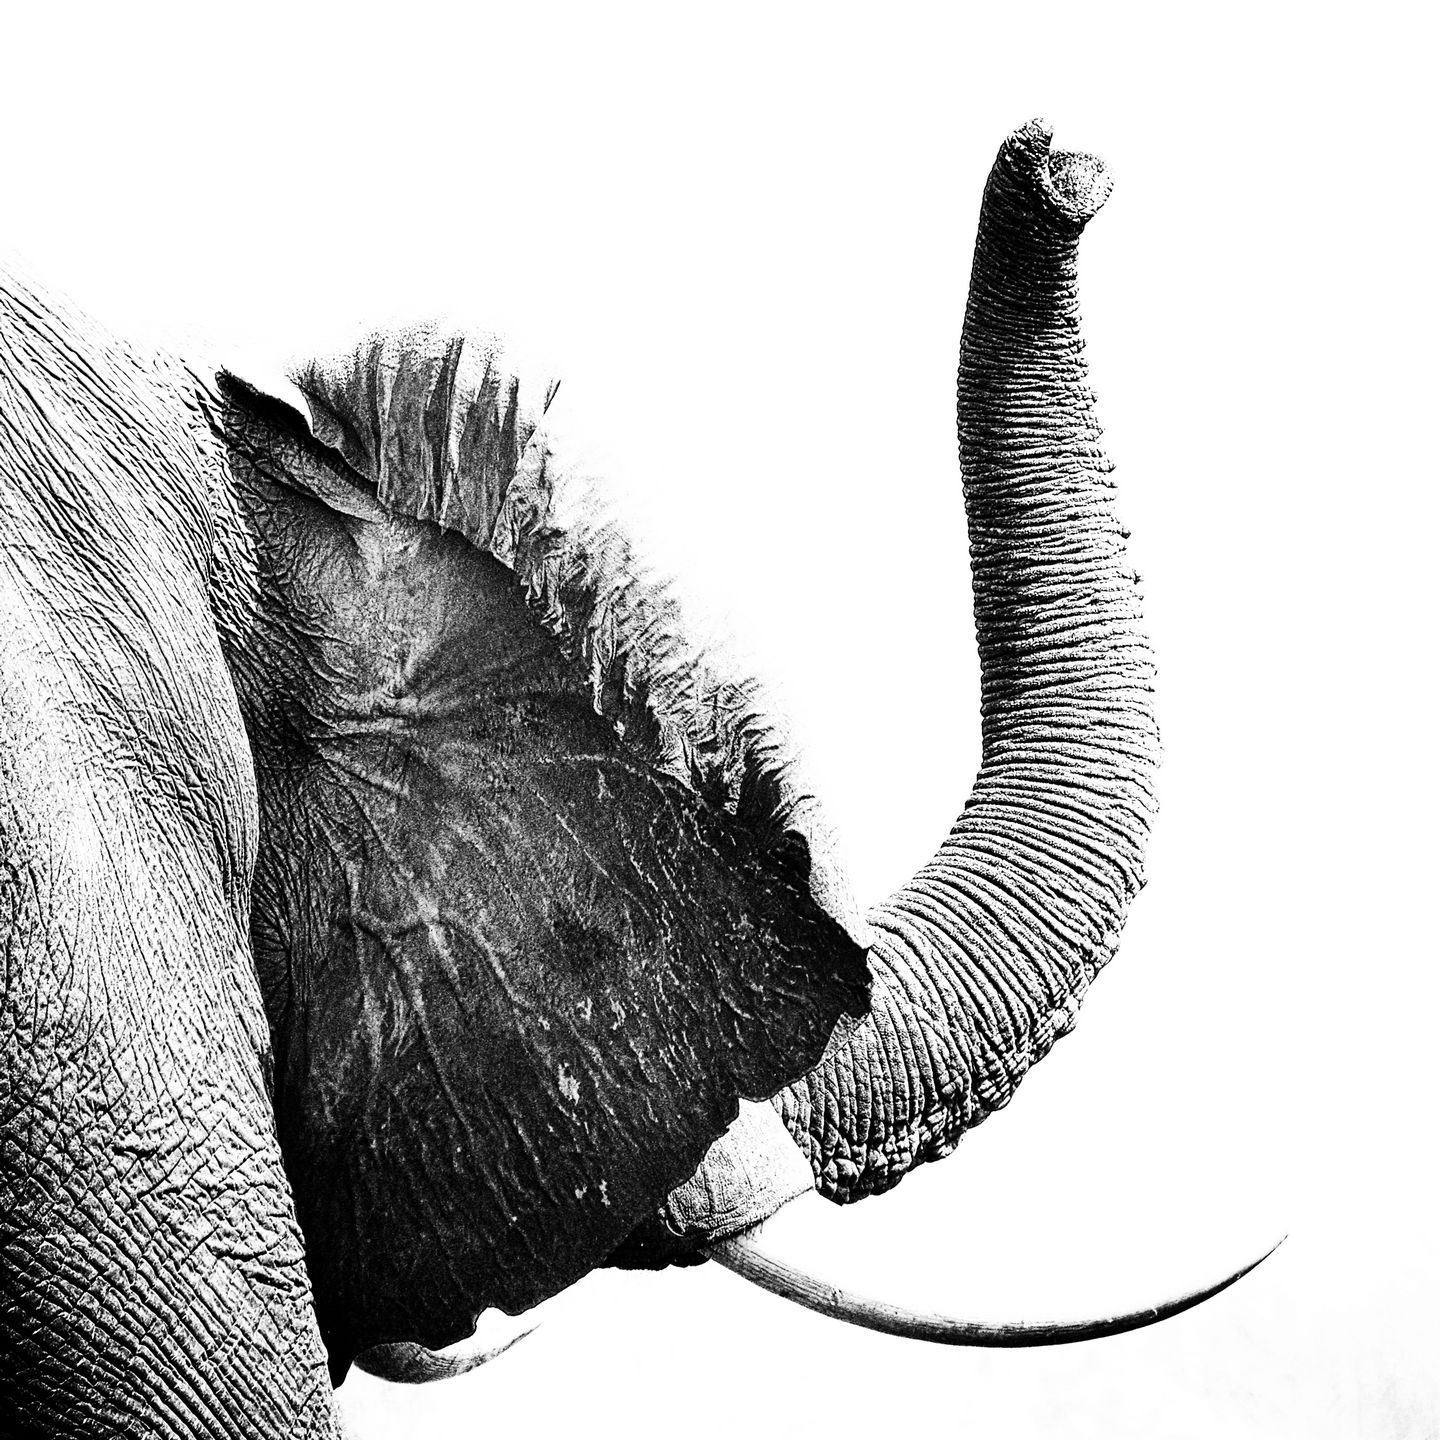 Elephant 22